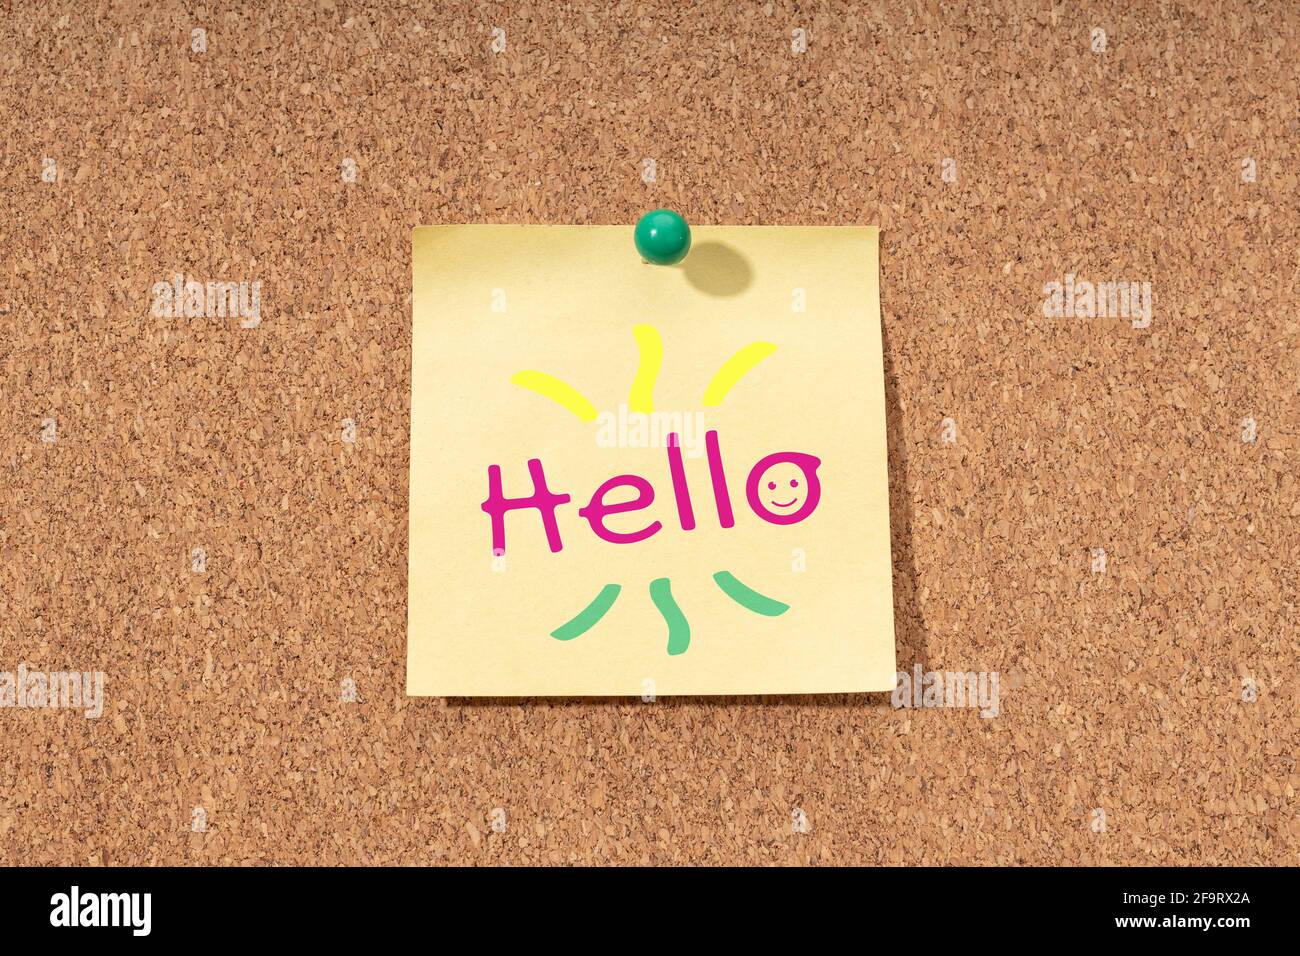 Hello word on yellow note on cork board Stock Photo